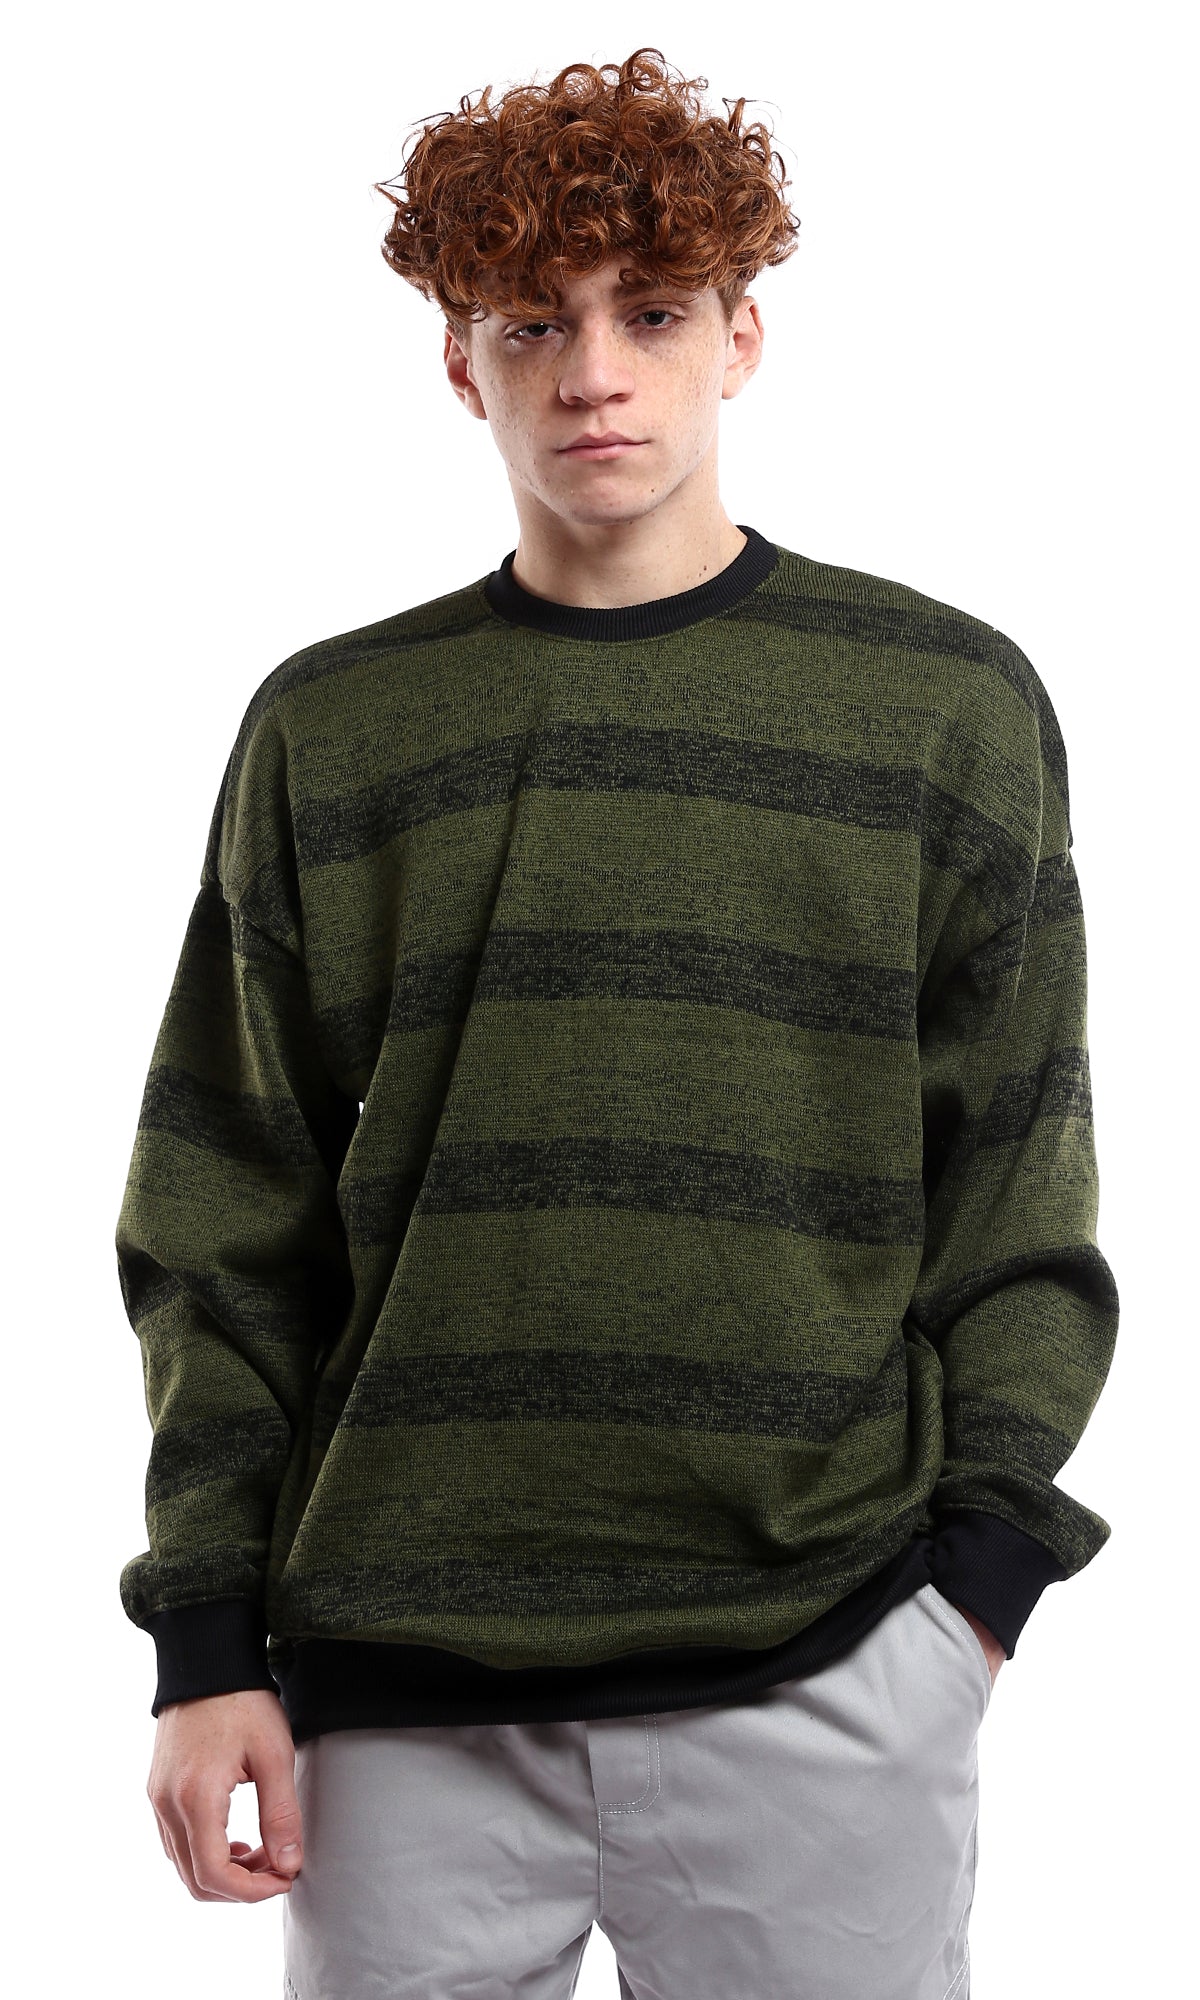 O178413 Striped Black & Olive Coziness Slip On Sweatshirt